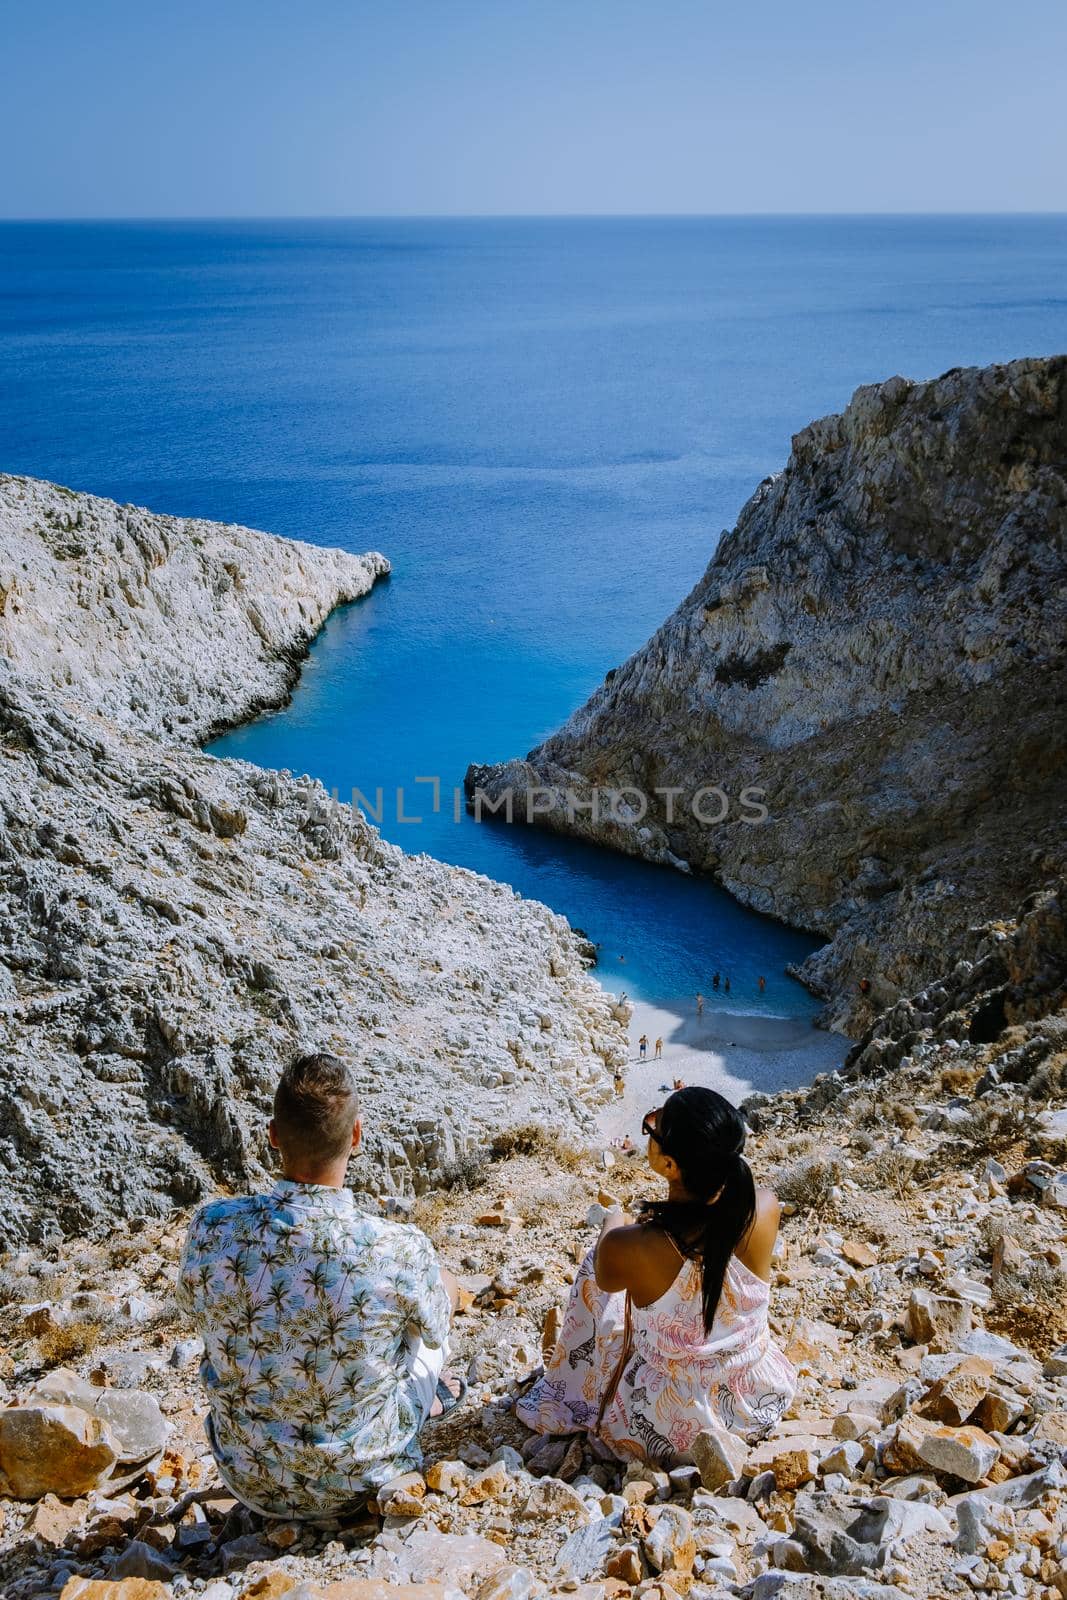 Beautiful beach called Seitan limania on Crete, Greece Europe